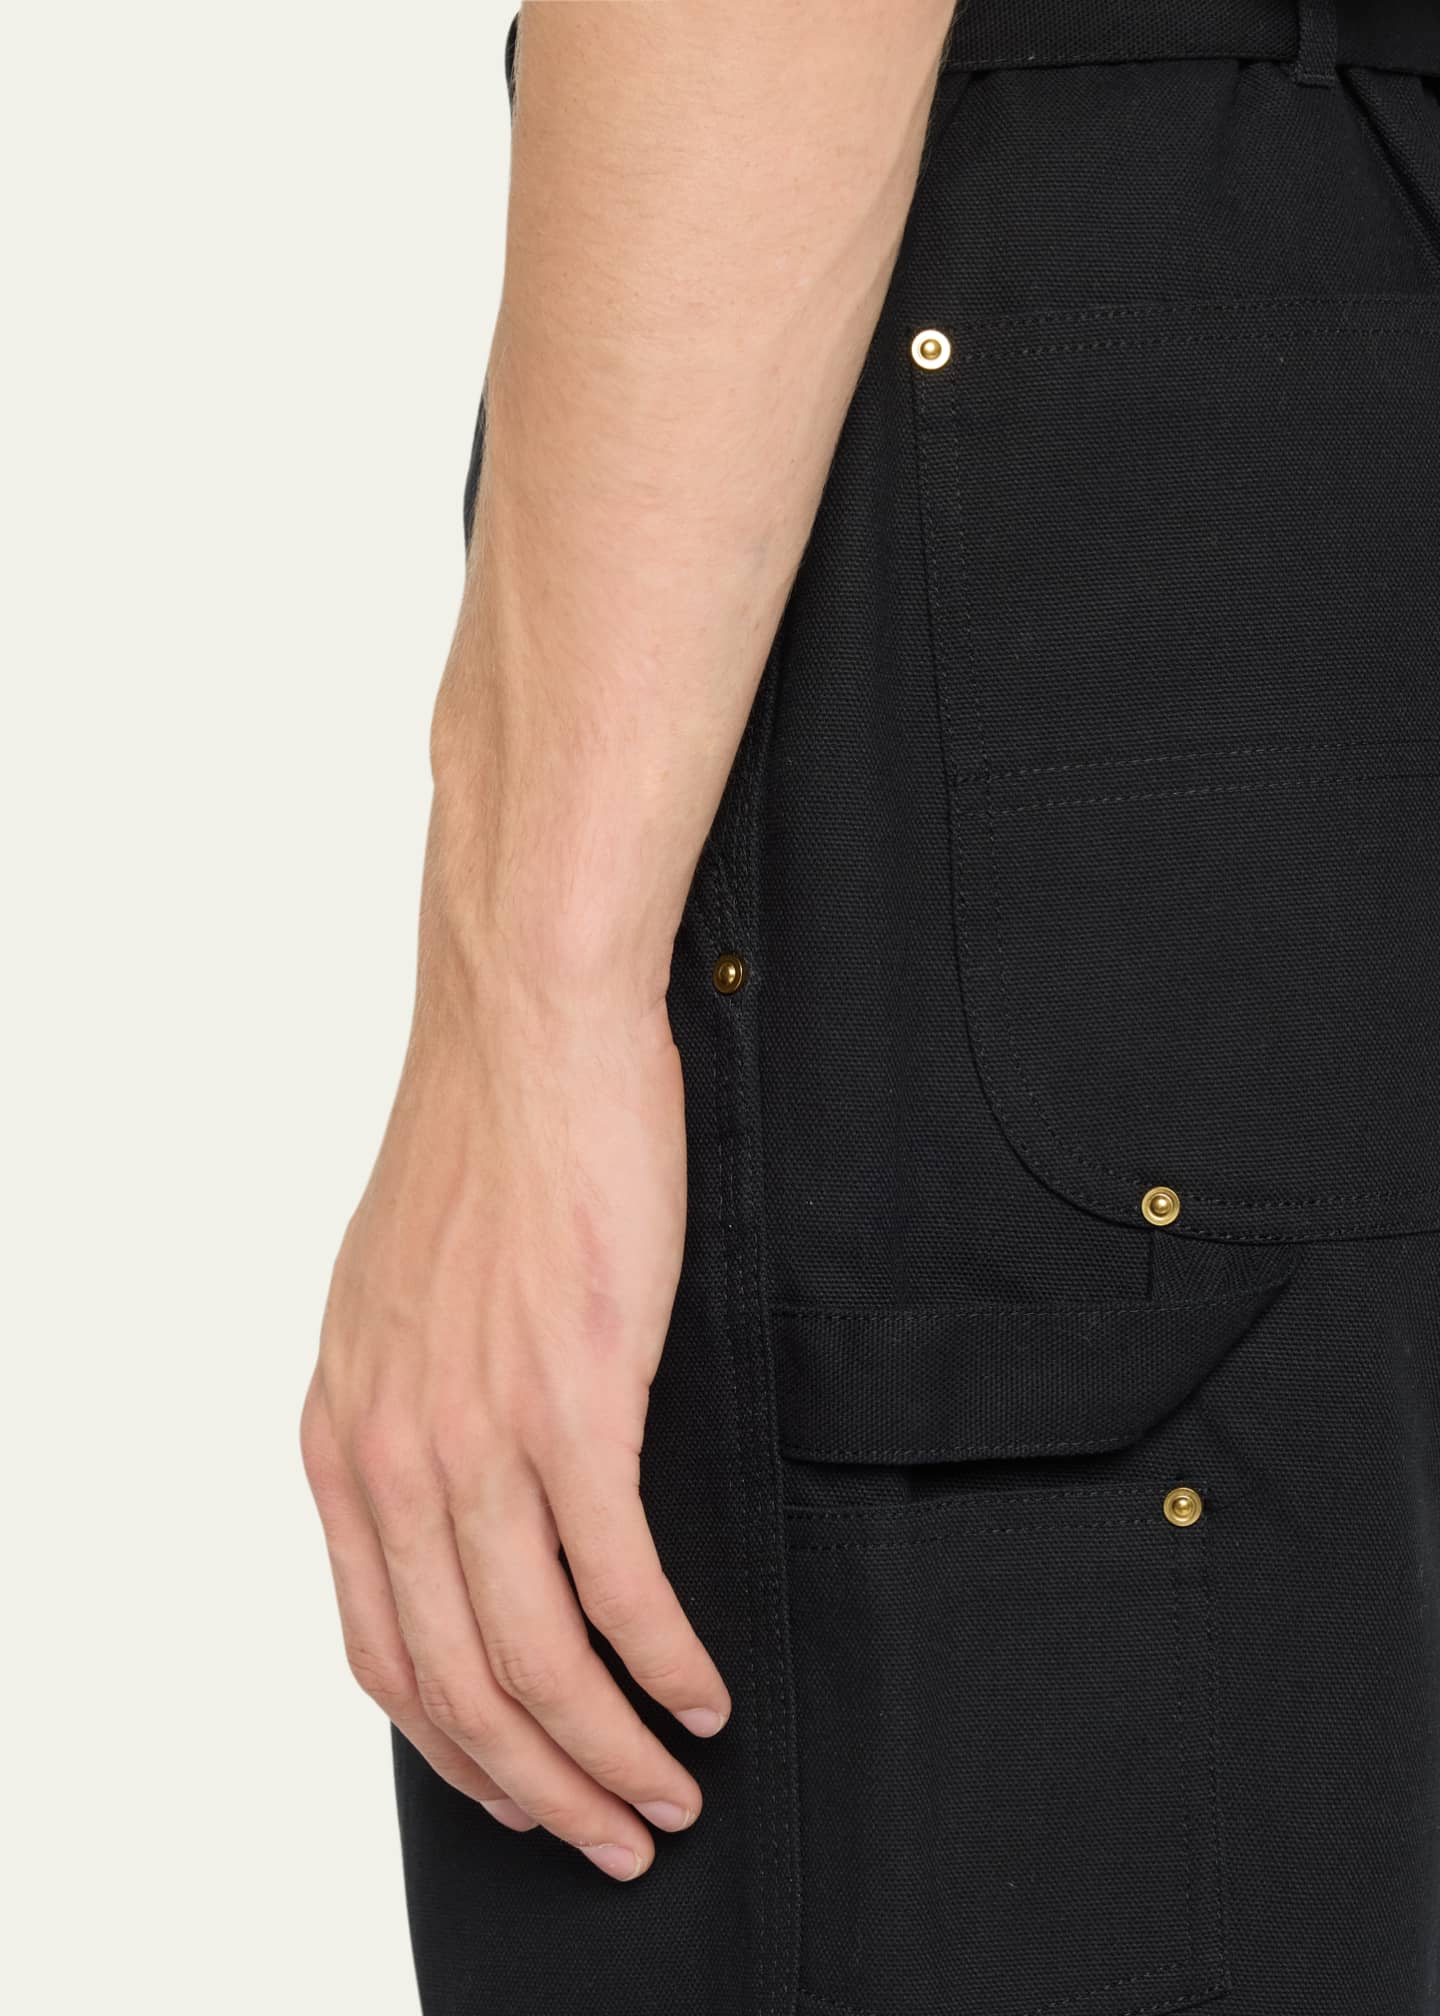 SACAI x Carhartt WIP Men's Belted Canvas Pants - Bergdorf Goodman